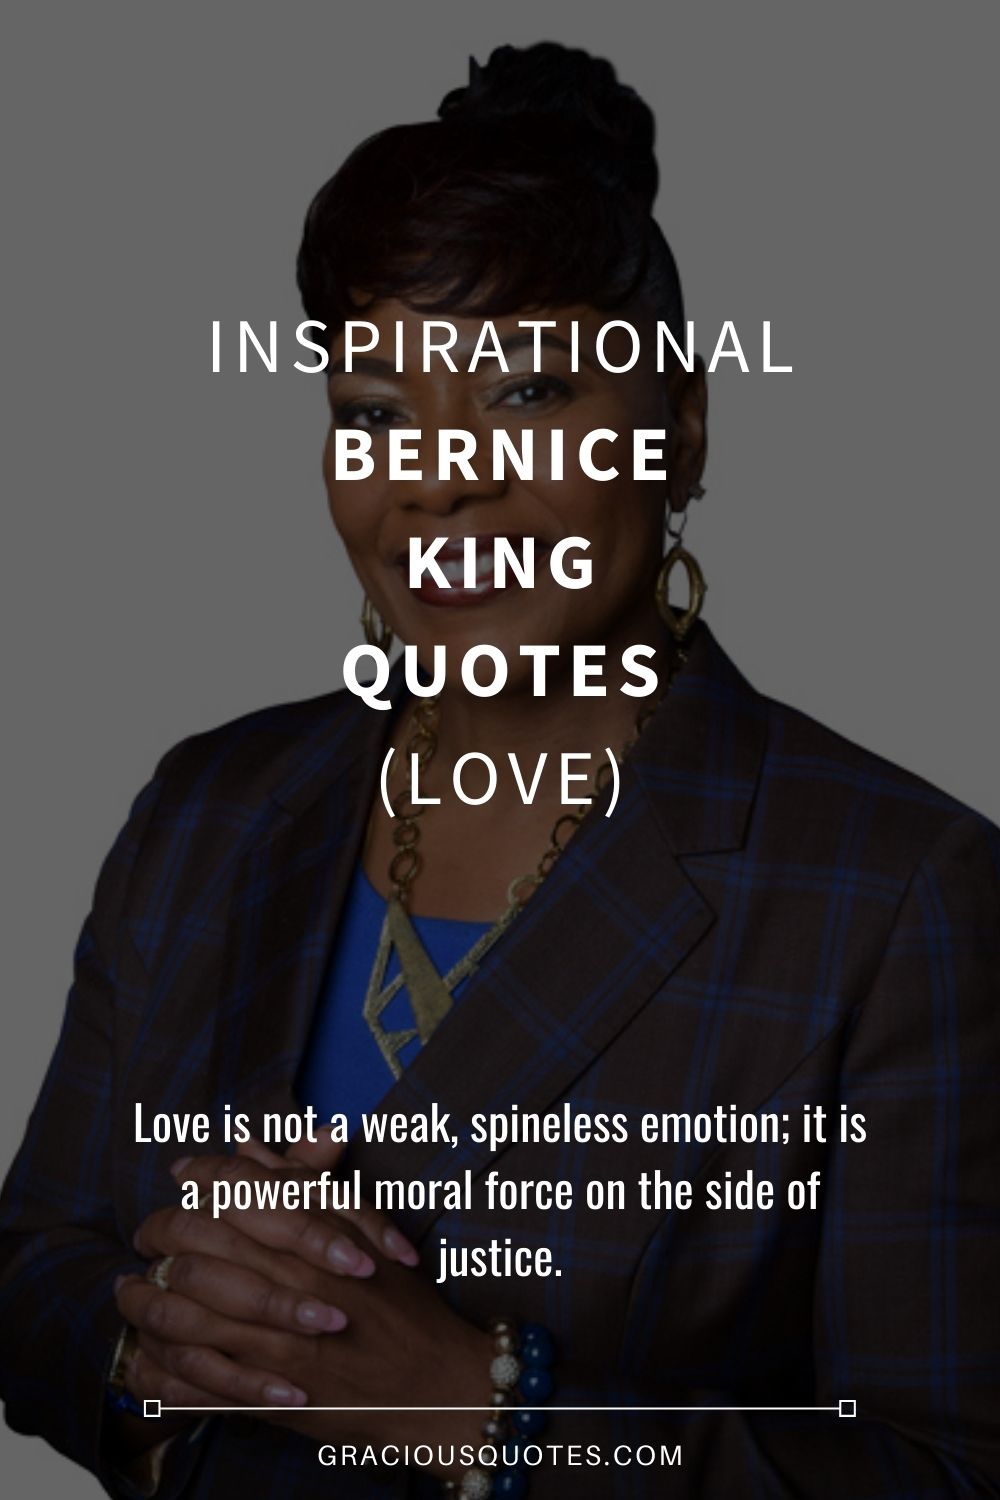 Inspirational Bernice King Quotes (LOVE) - Gracious Quotes